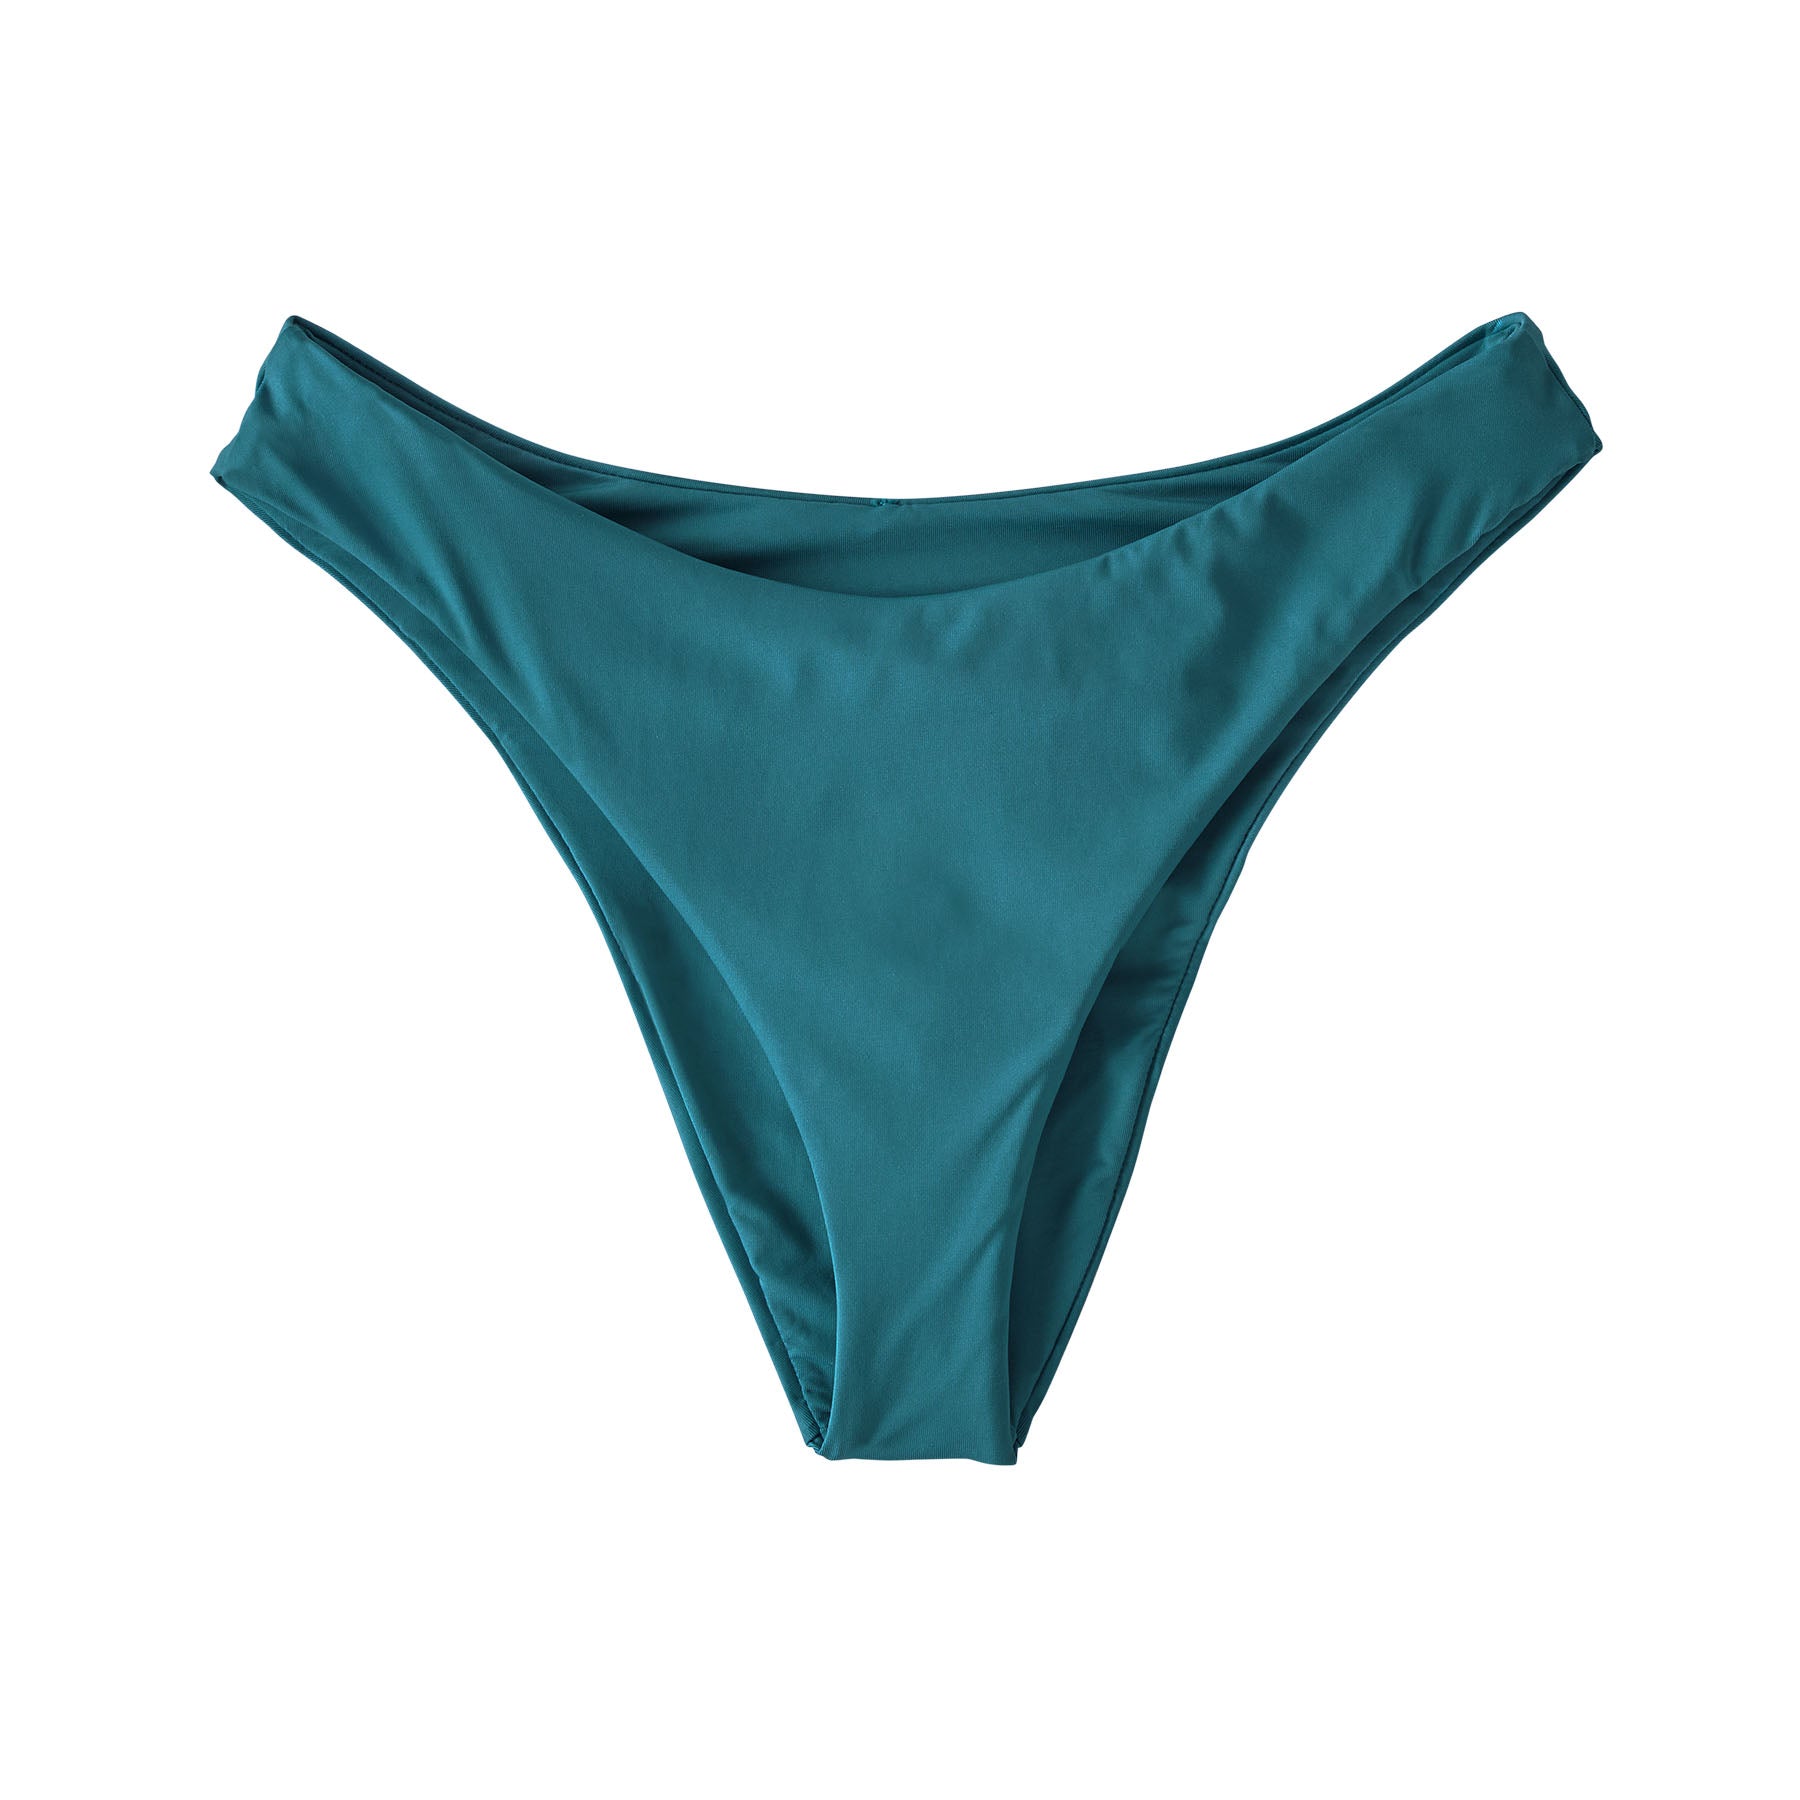 Patagonia Women's Sunrise Slider Bikini Bottoms